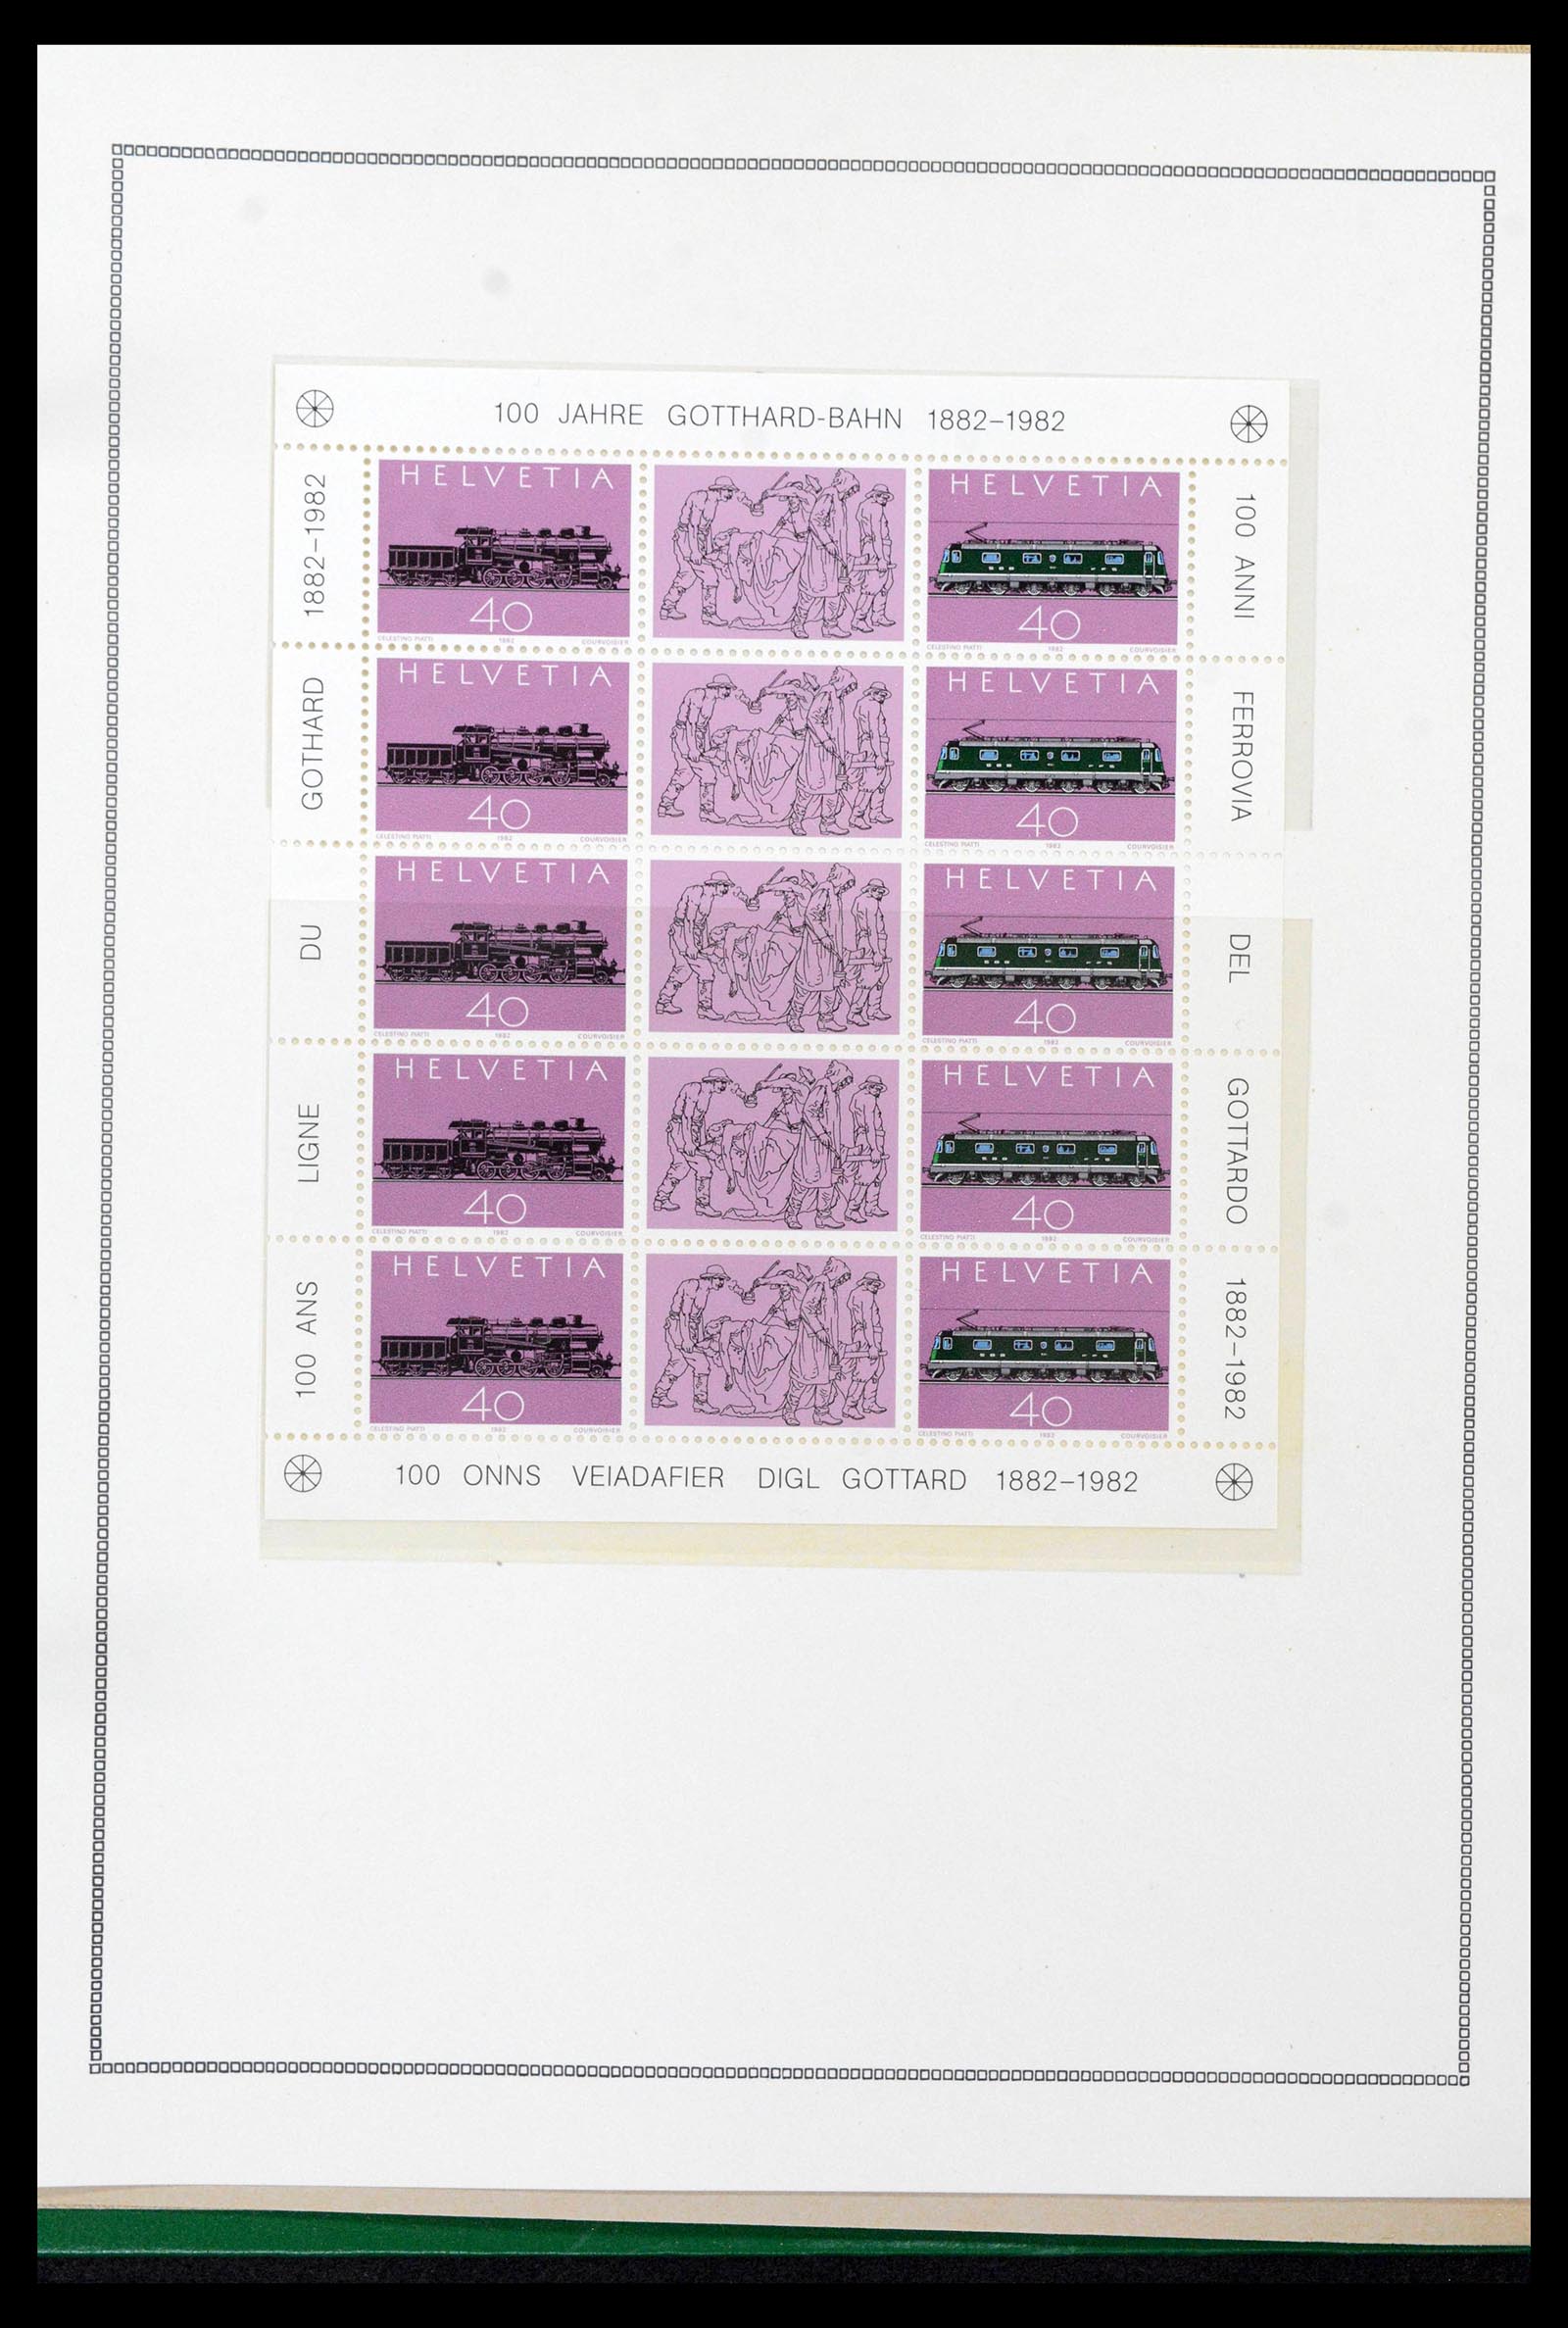 39096 0062 - Stamp collection 39096 Switzerland 1907-1963.